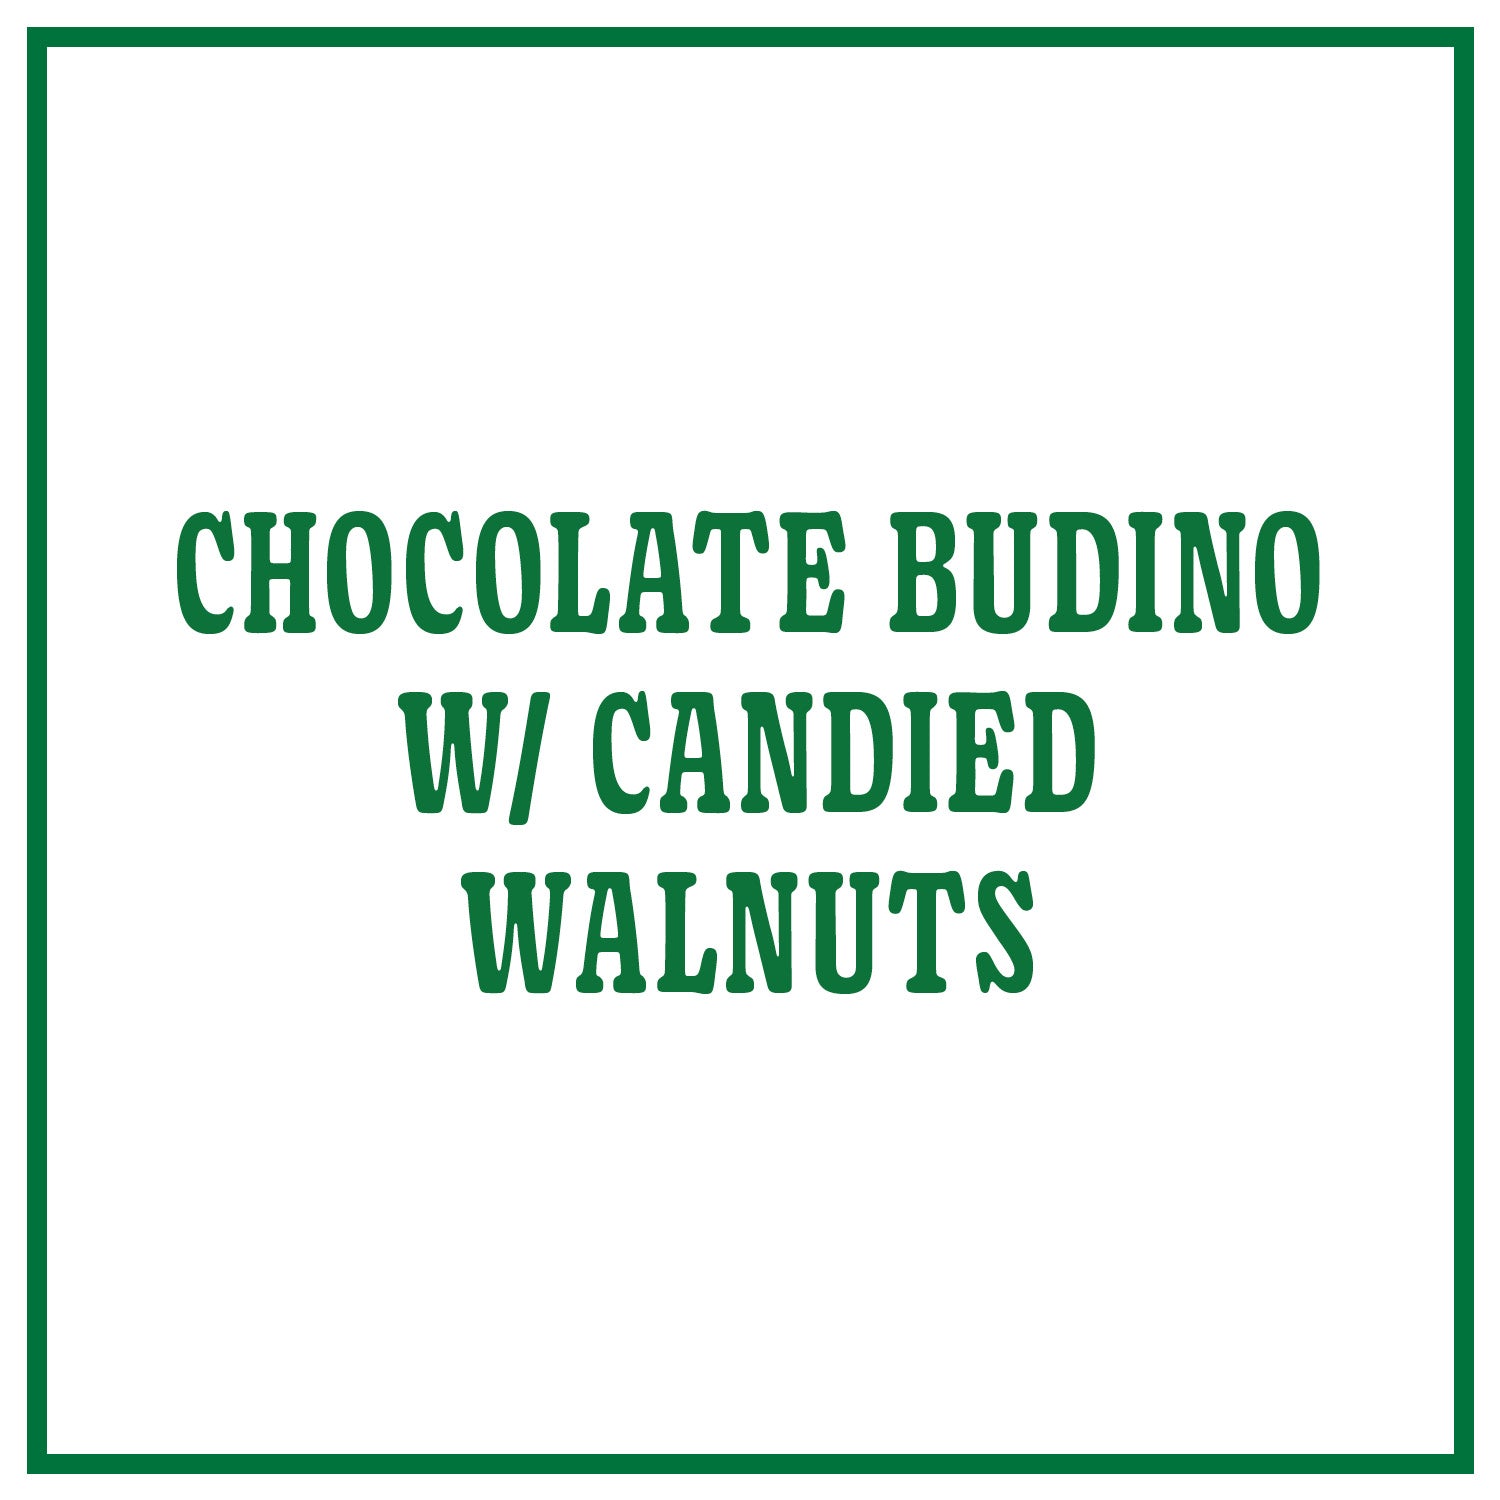 Chocolate Budino with Candied Walnuts